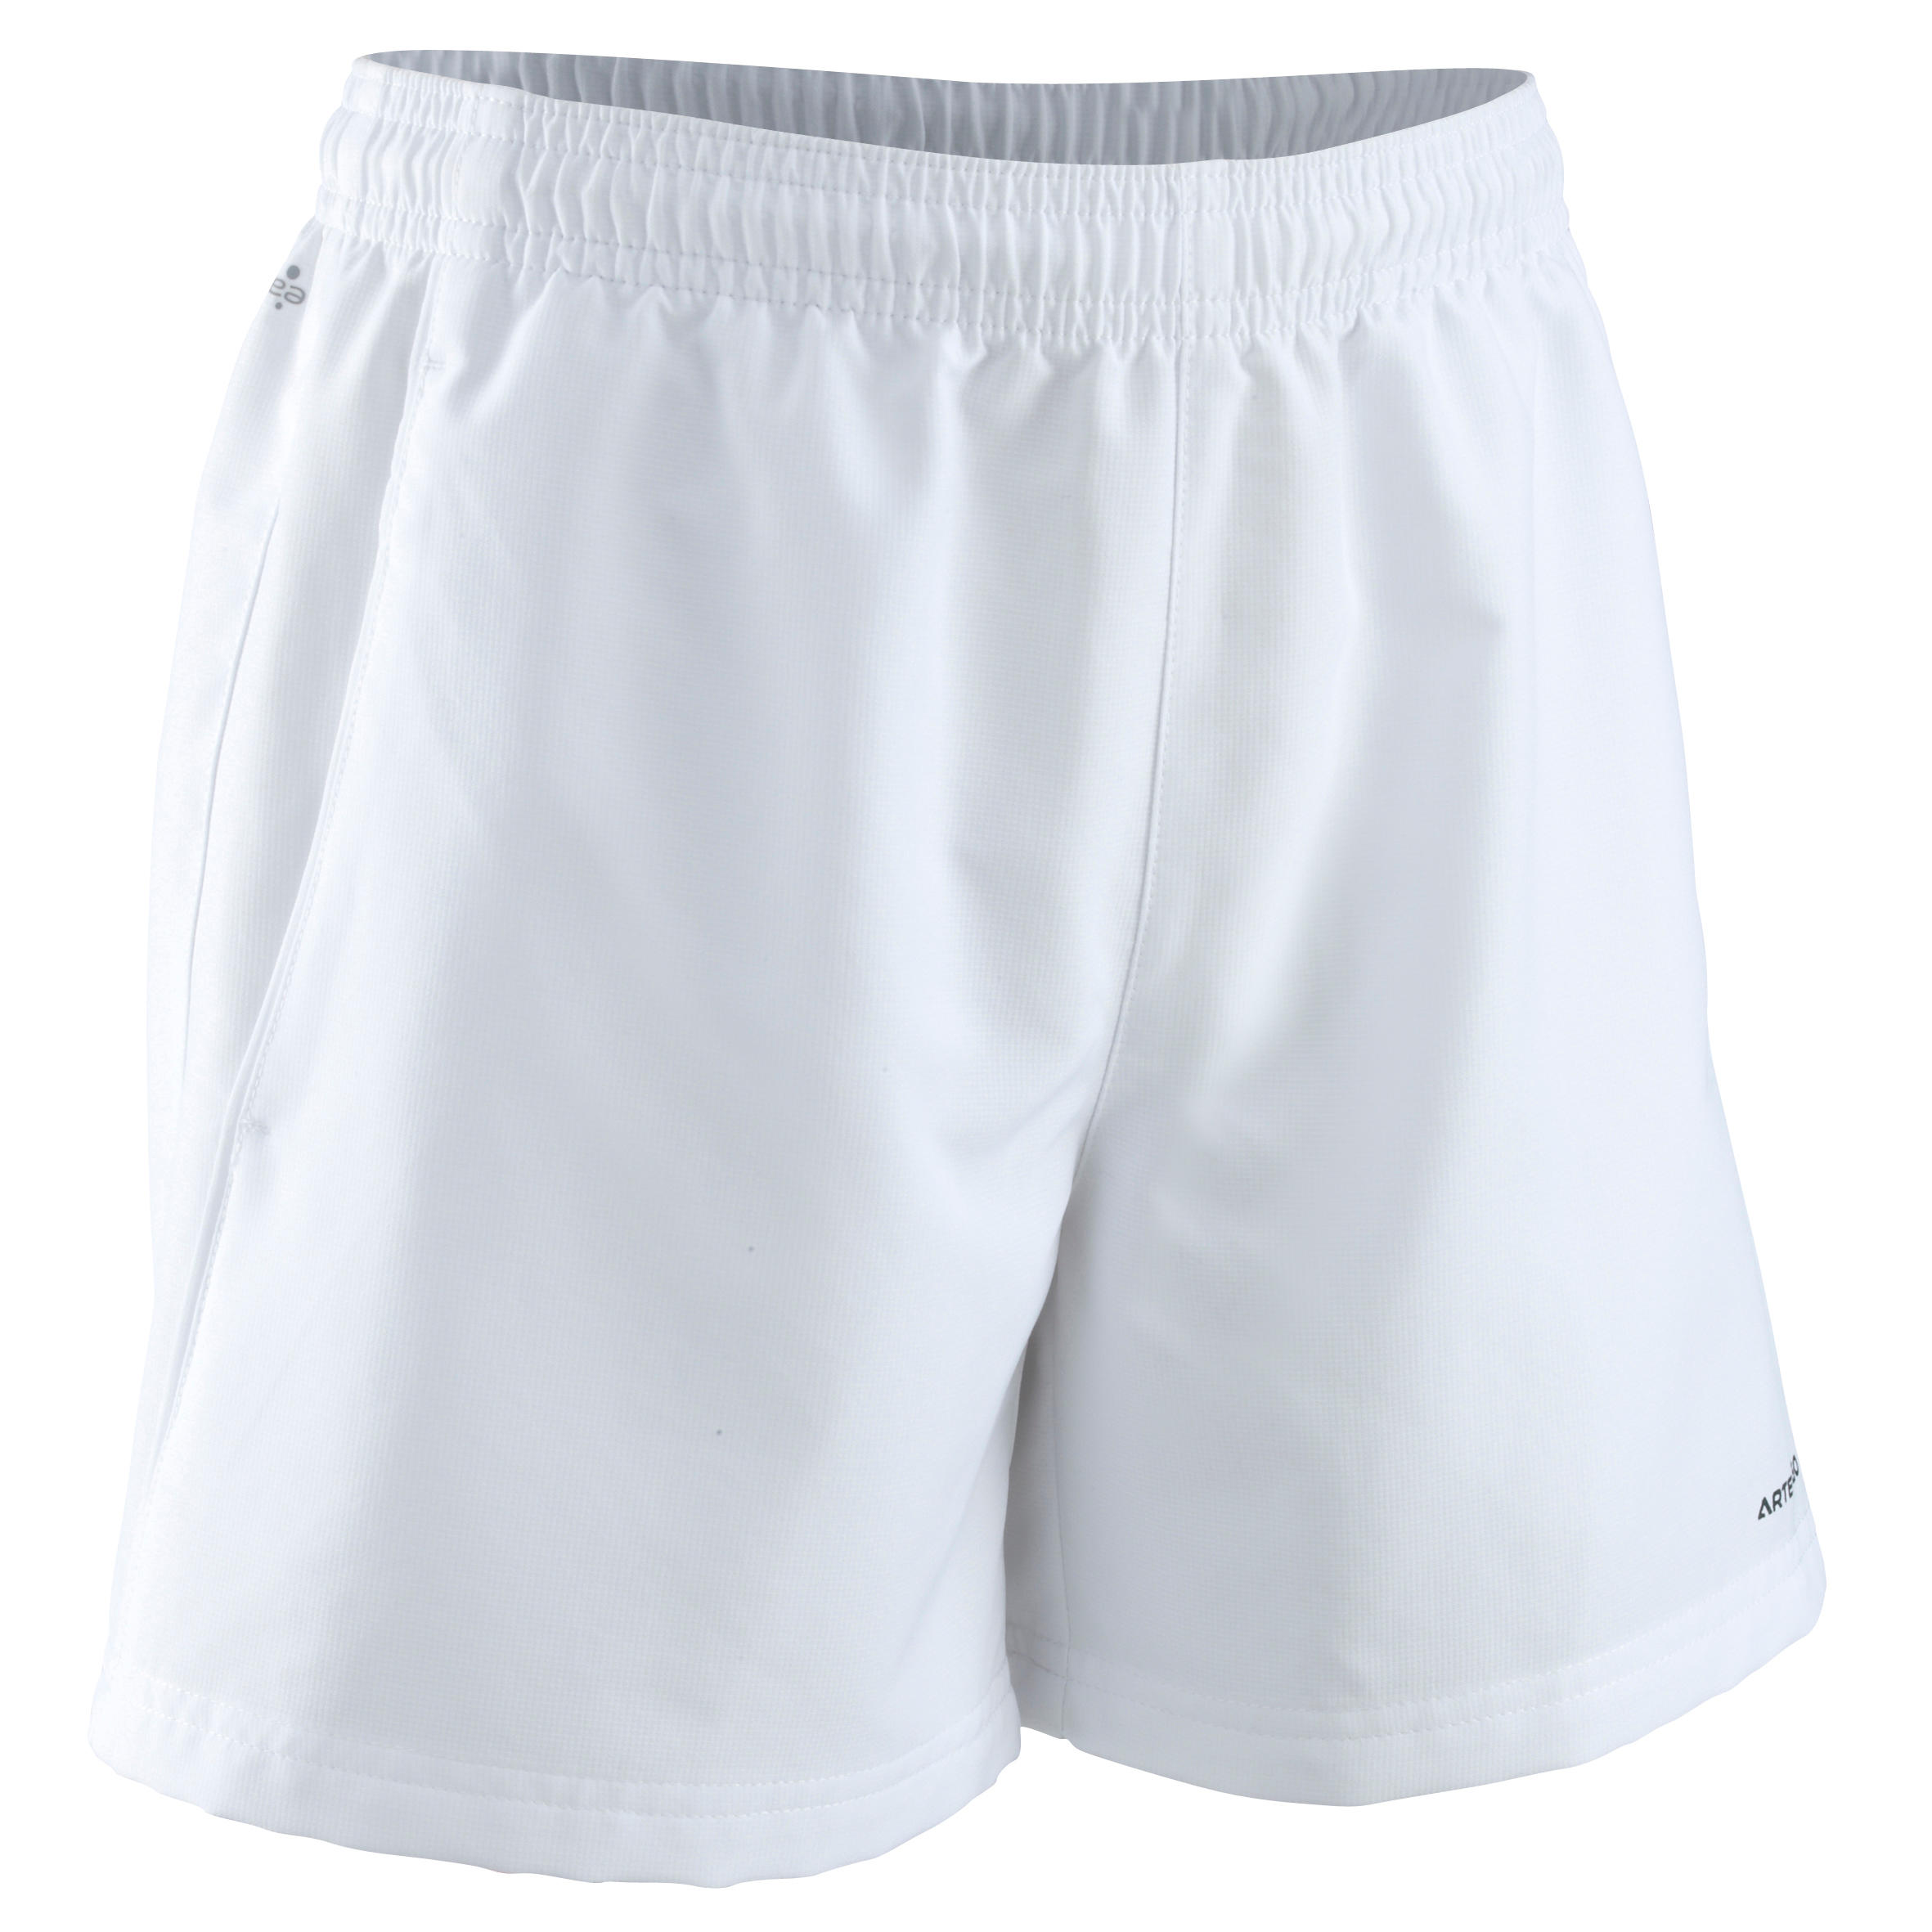 decathlon shorts price